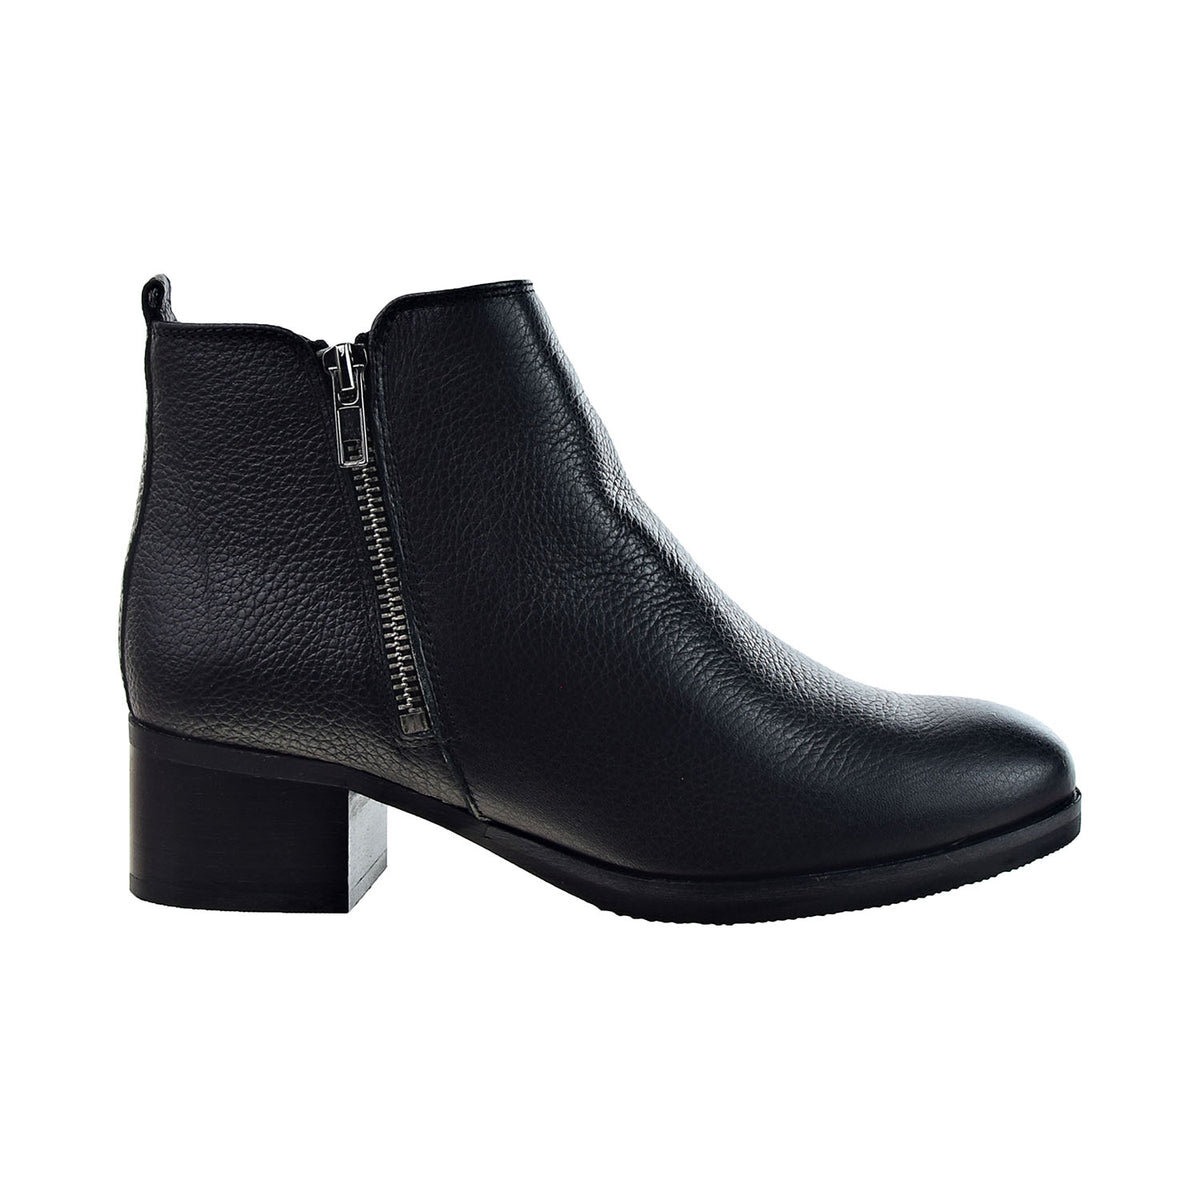 drijvend factor heel fijn Clarks Mila Sky Women's Ankle Boots Black Leather